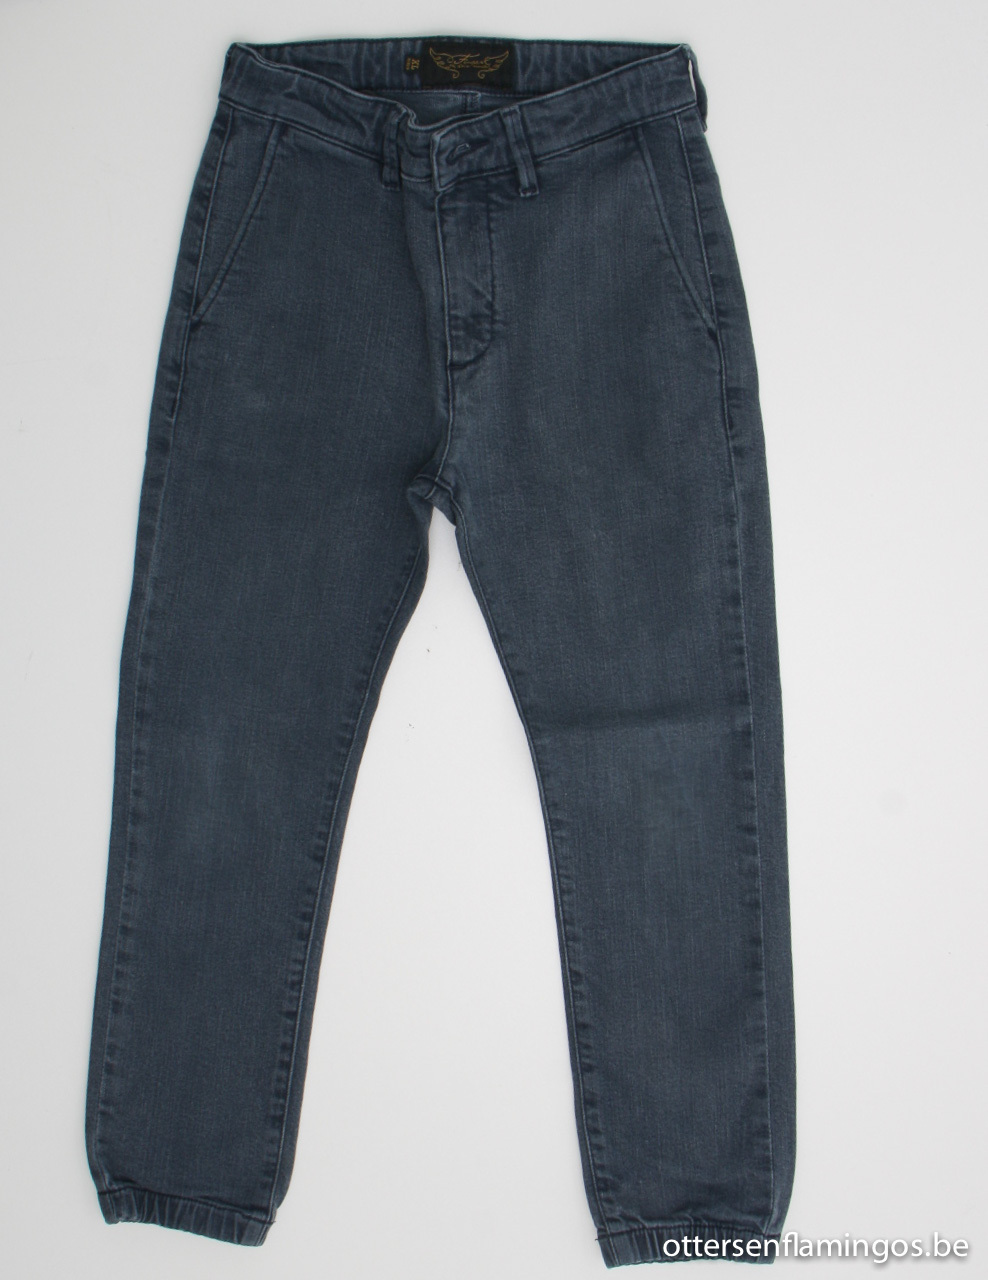 Blauw grijze jeans, FITN, 128/134